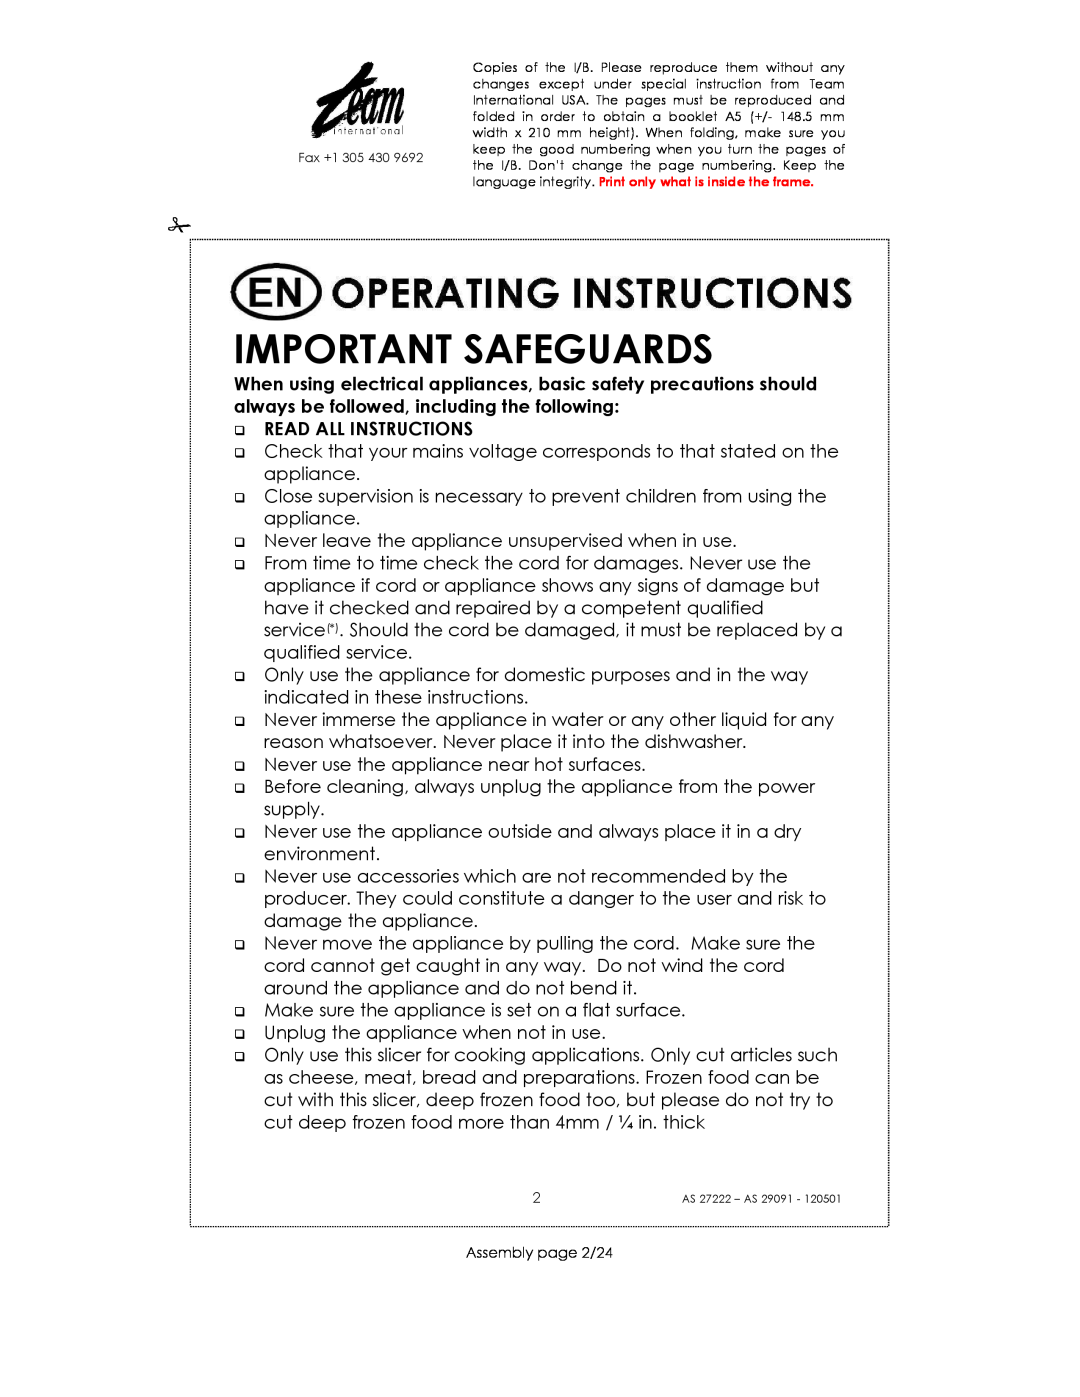 Kalorik AS 29091, AS 27222 manual Important Safeguards, Read All Instructions 